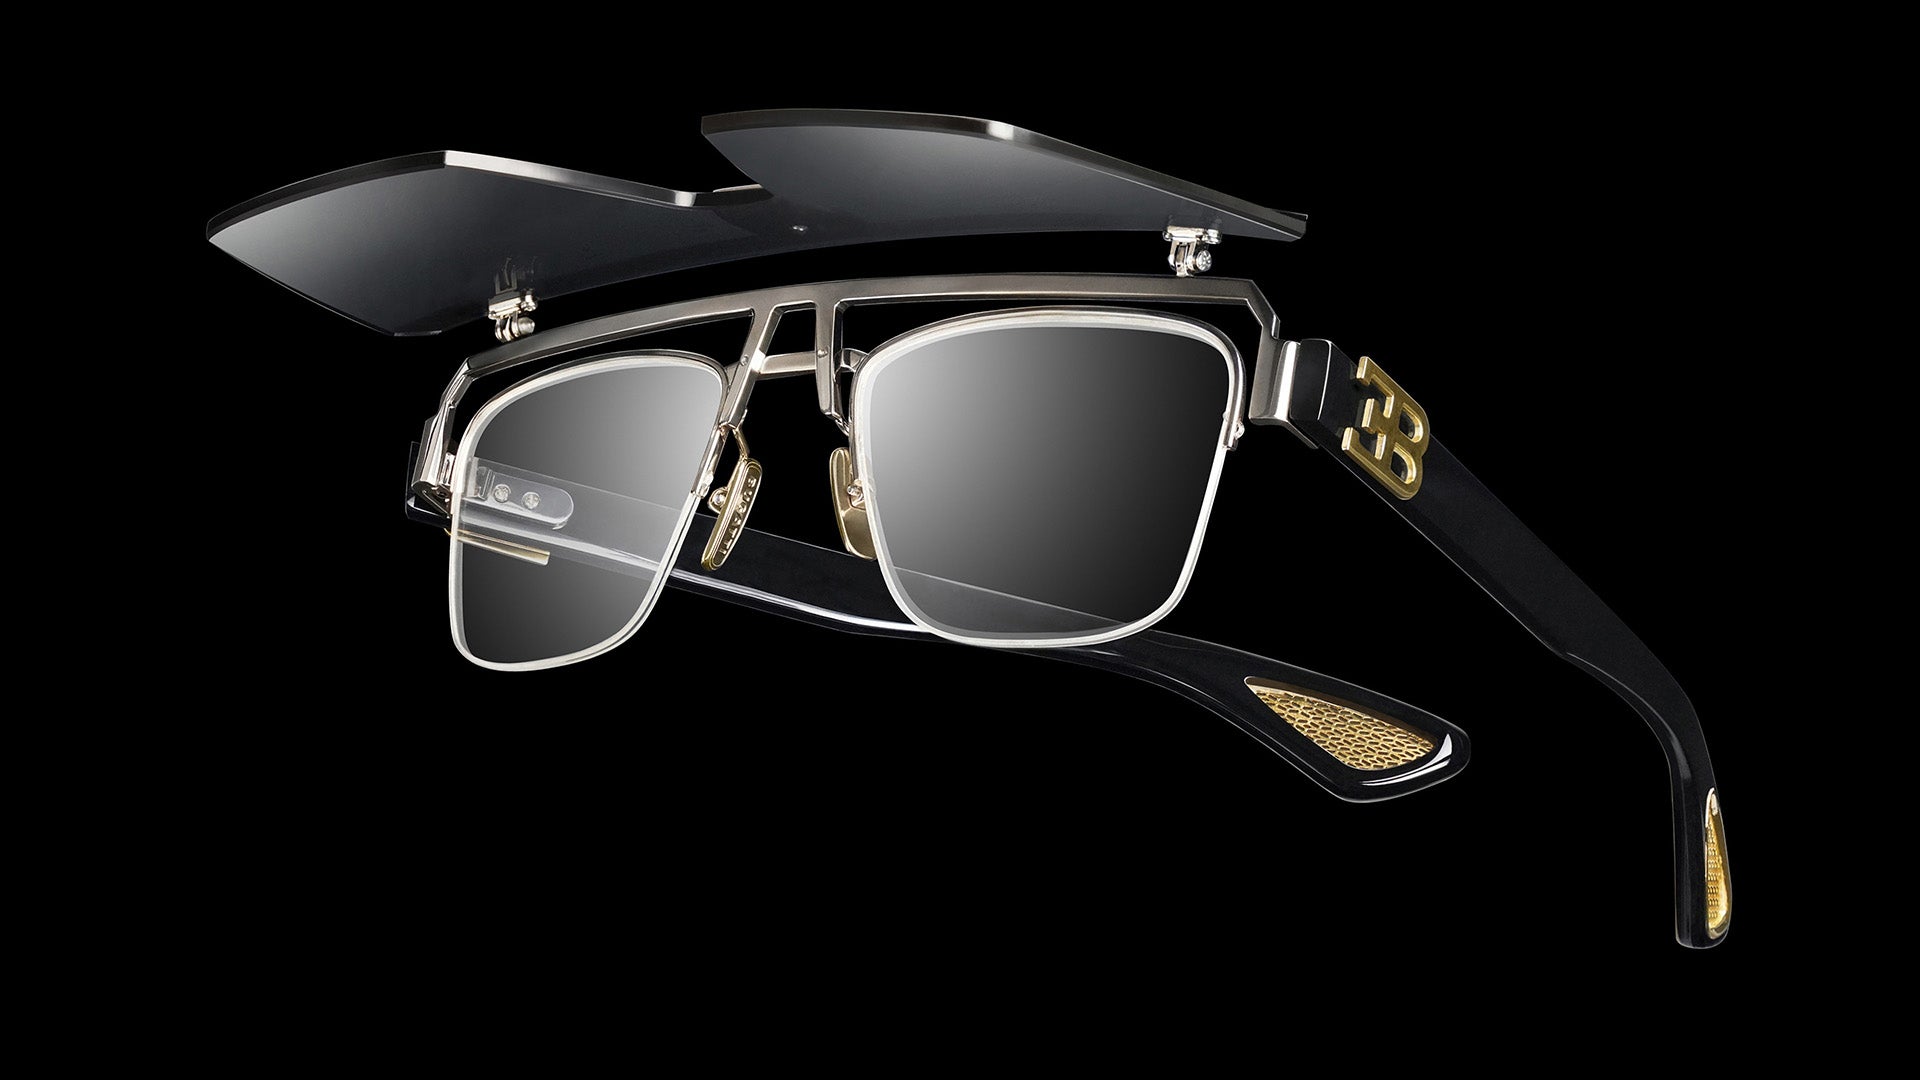 The latest Bugatti sunglasses have a very stylish appearance.